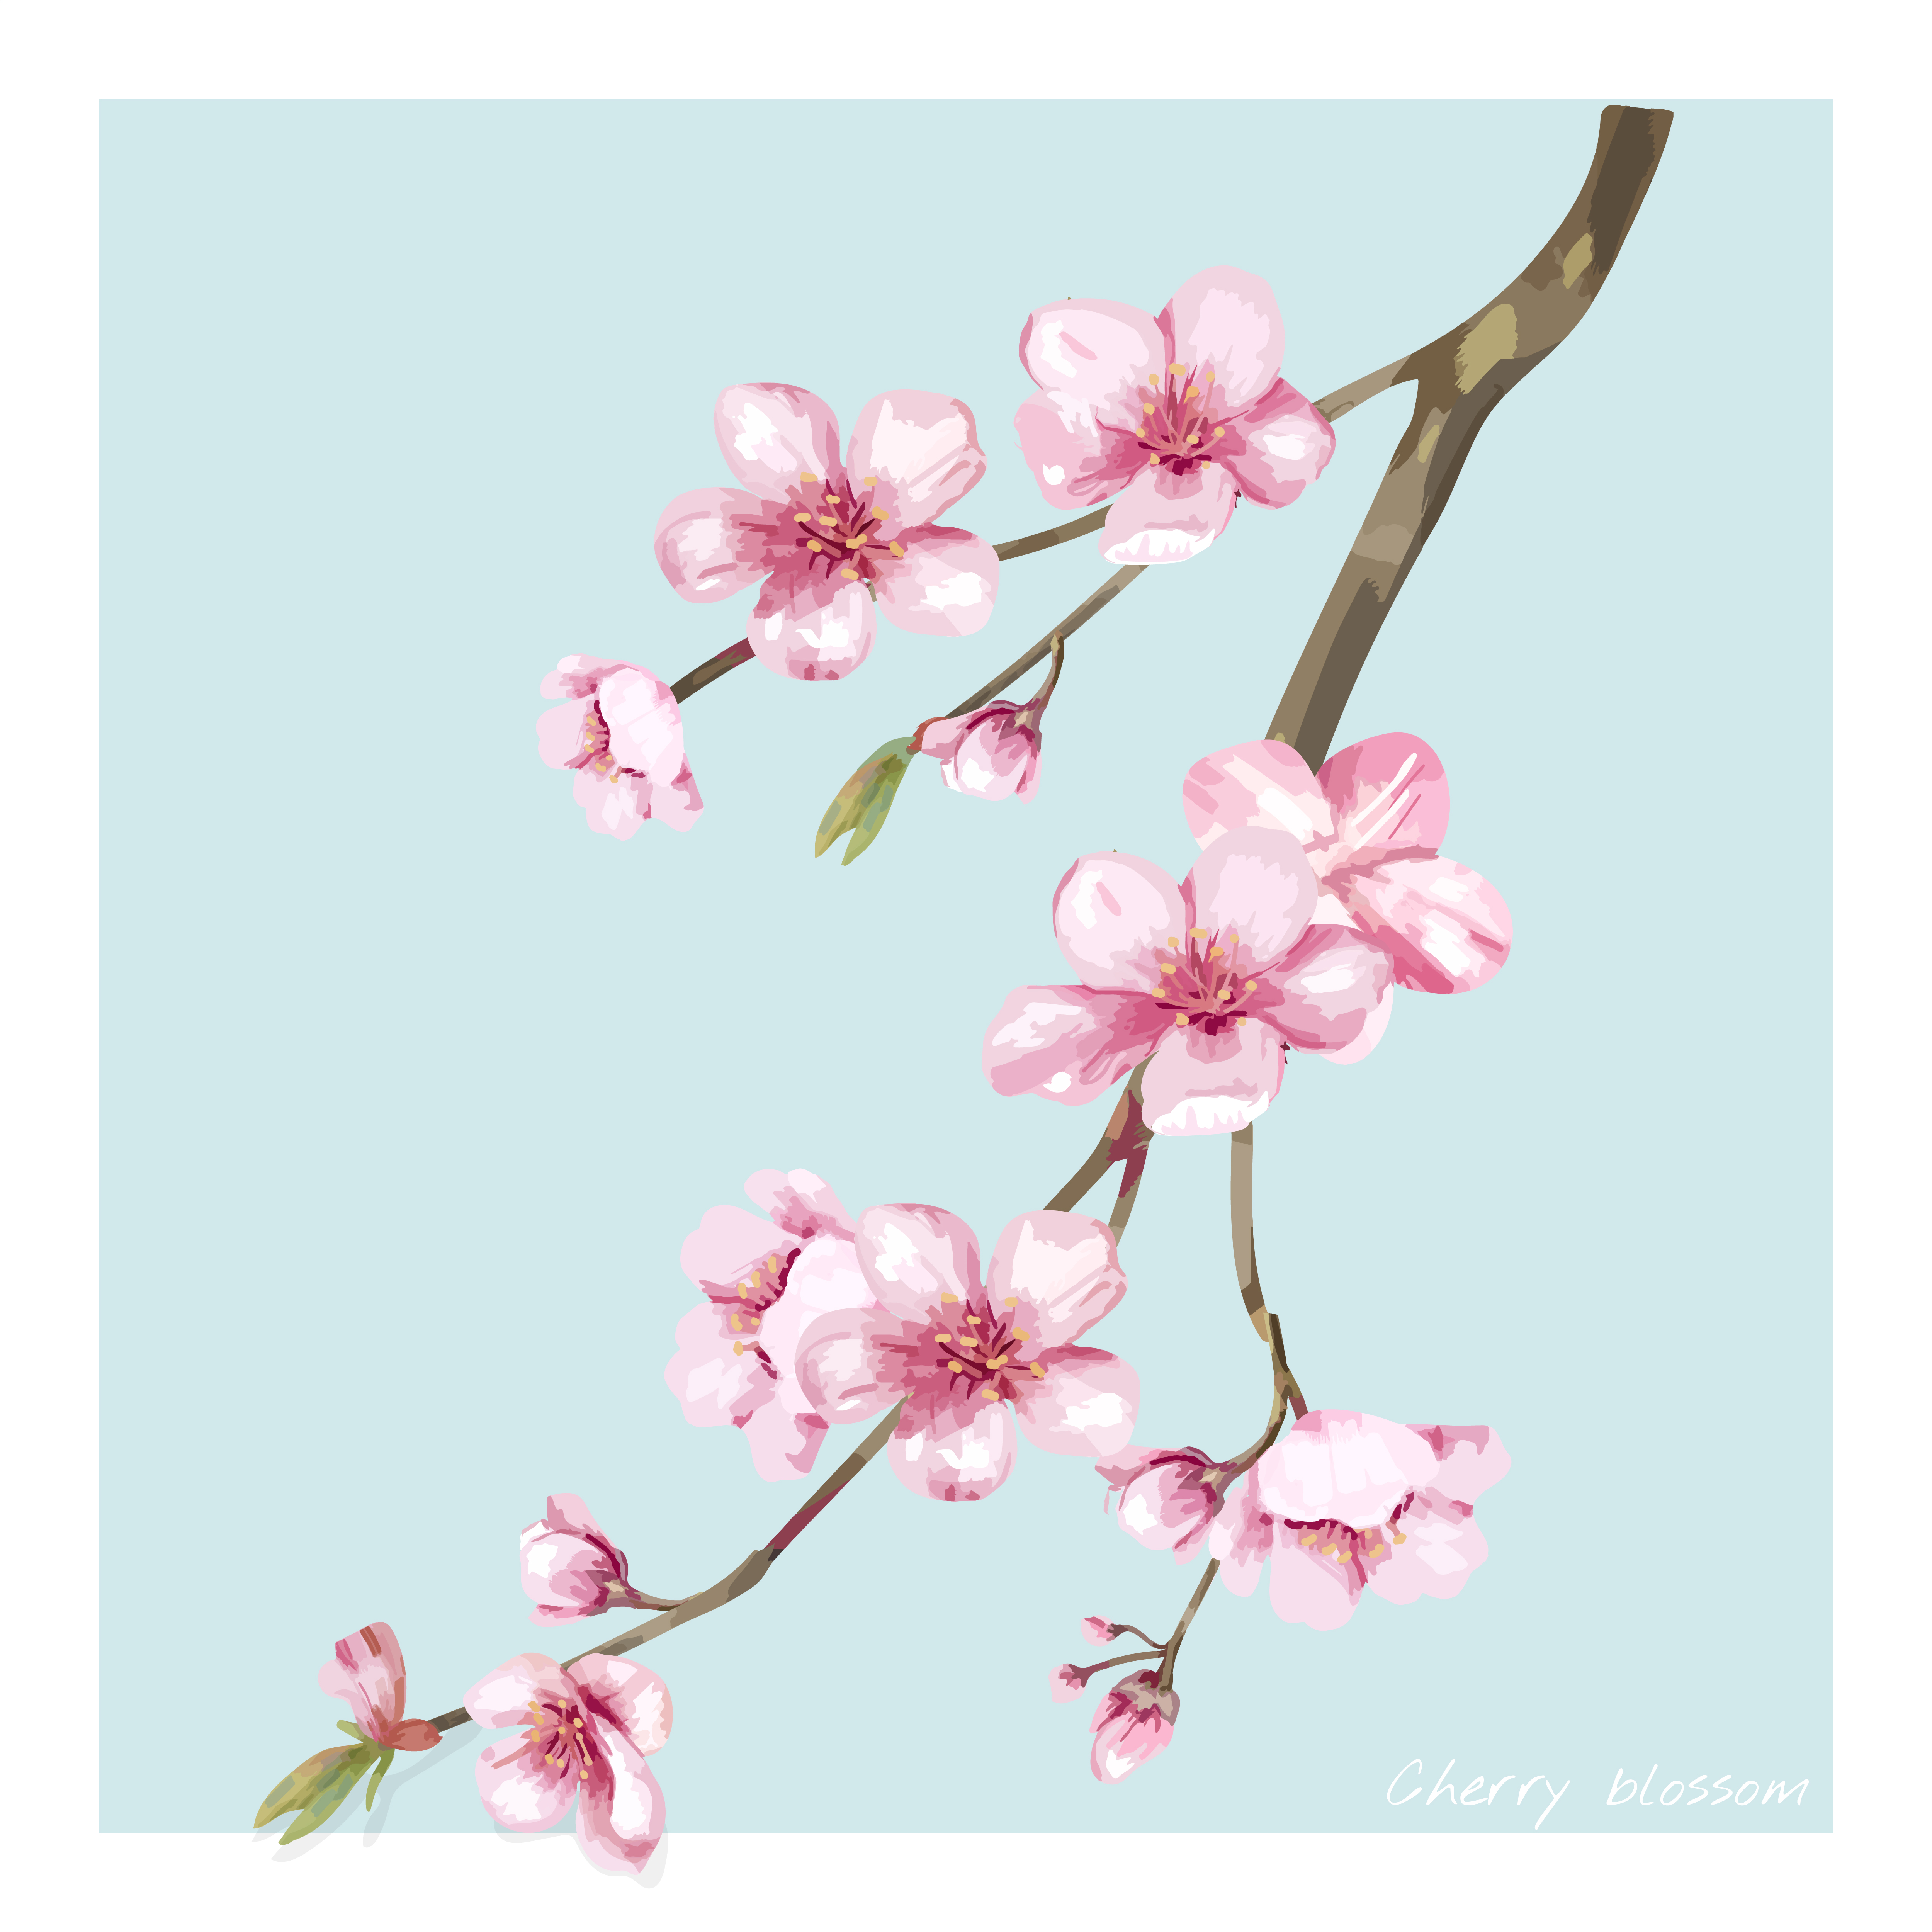 Hand Drawn Cherry Blossom Flower Illustration Download Free Vectors